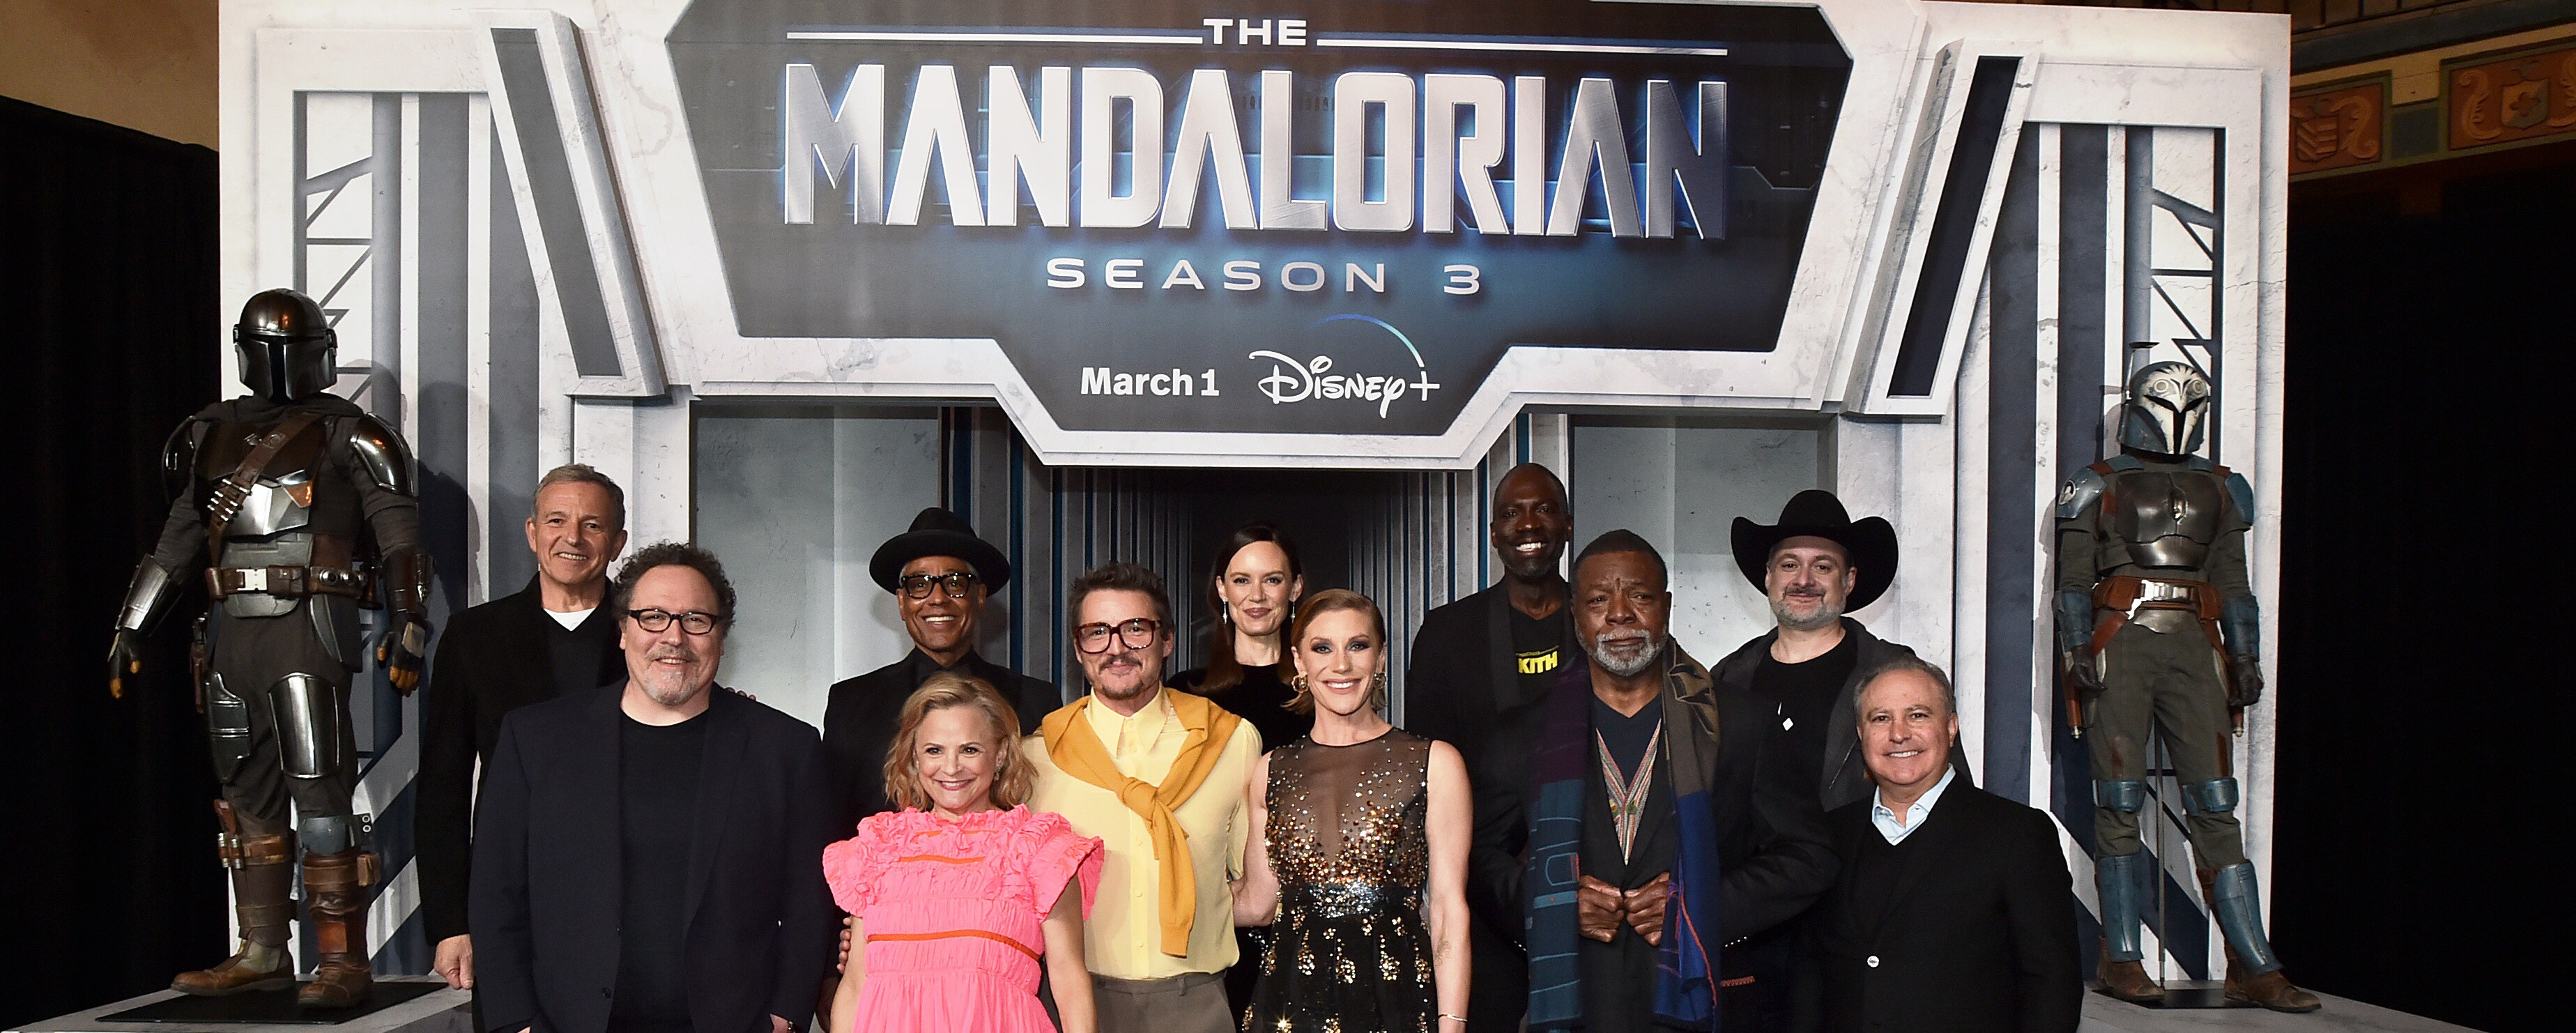 The Mandalorian' Season 3 Schedule: Episode 1 Lands on Disney Plus